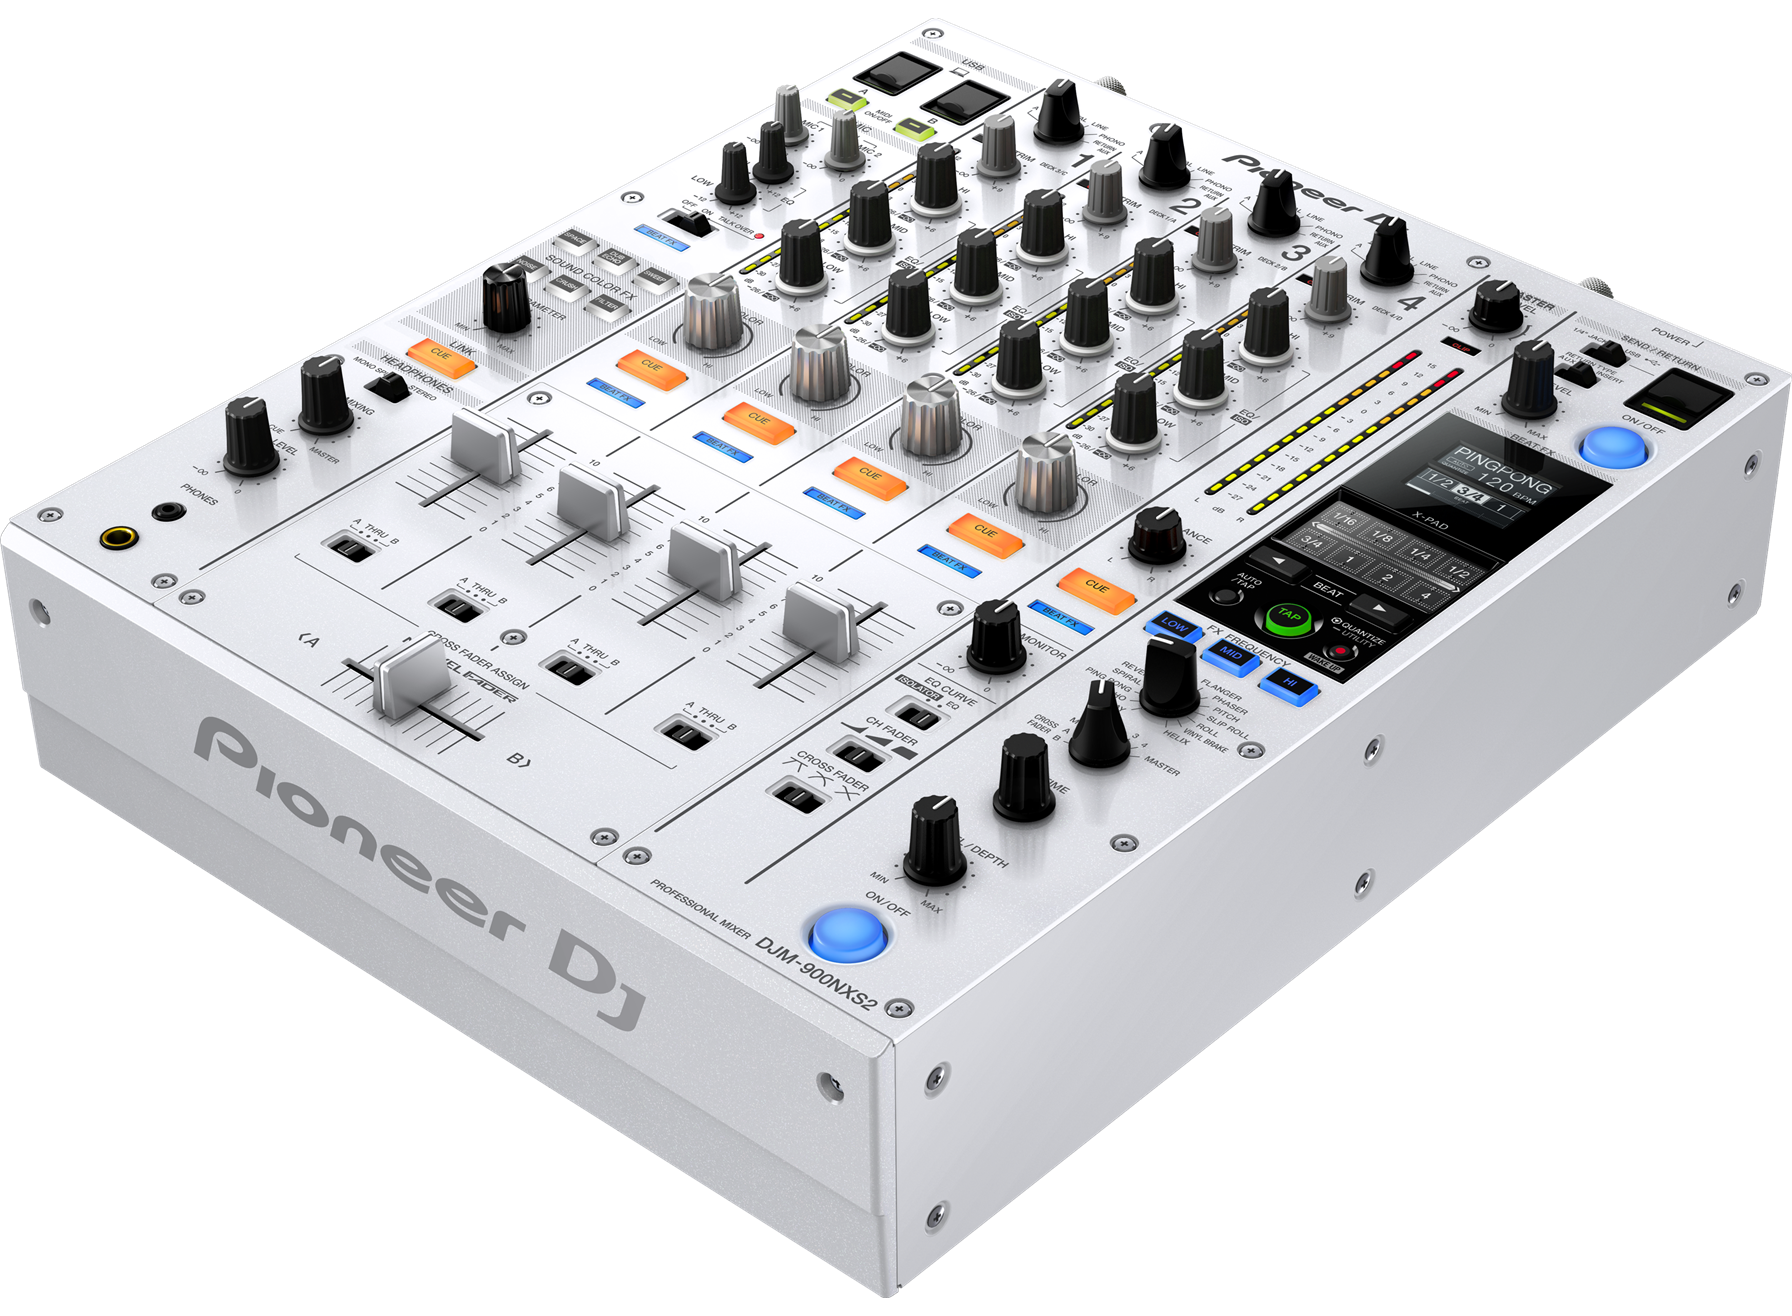 DJM-900NXS2-W (archived) 4-channel professional DJ mixer (white 